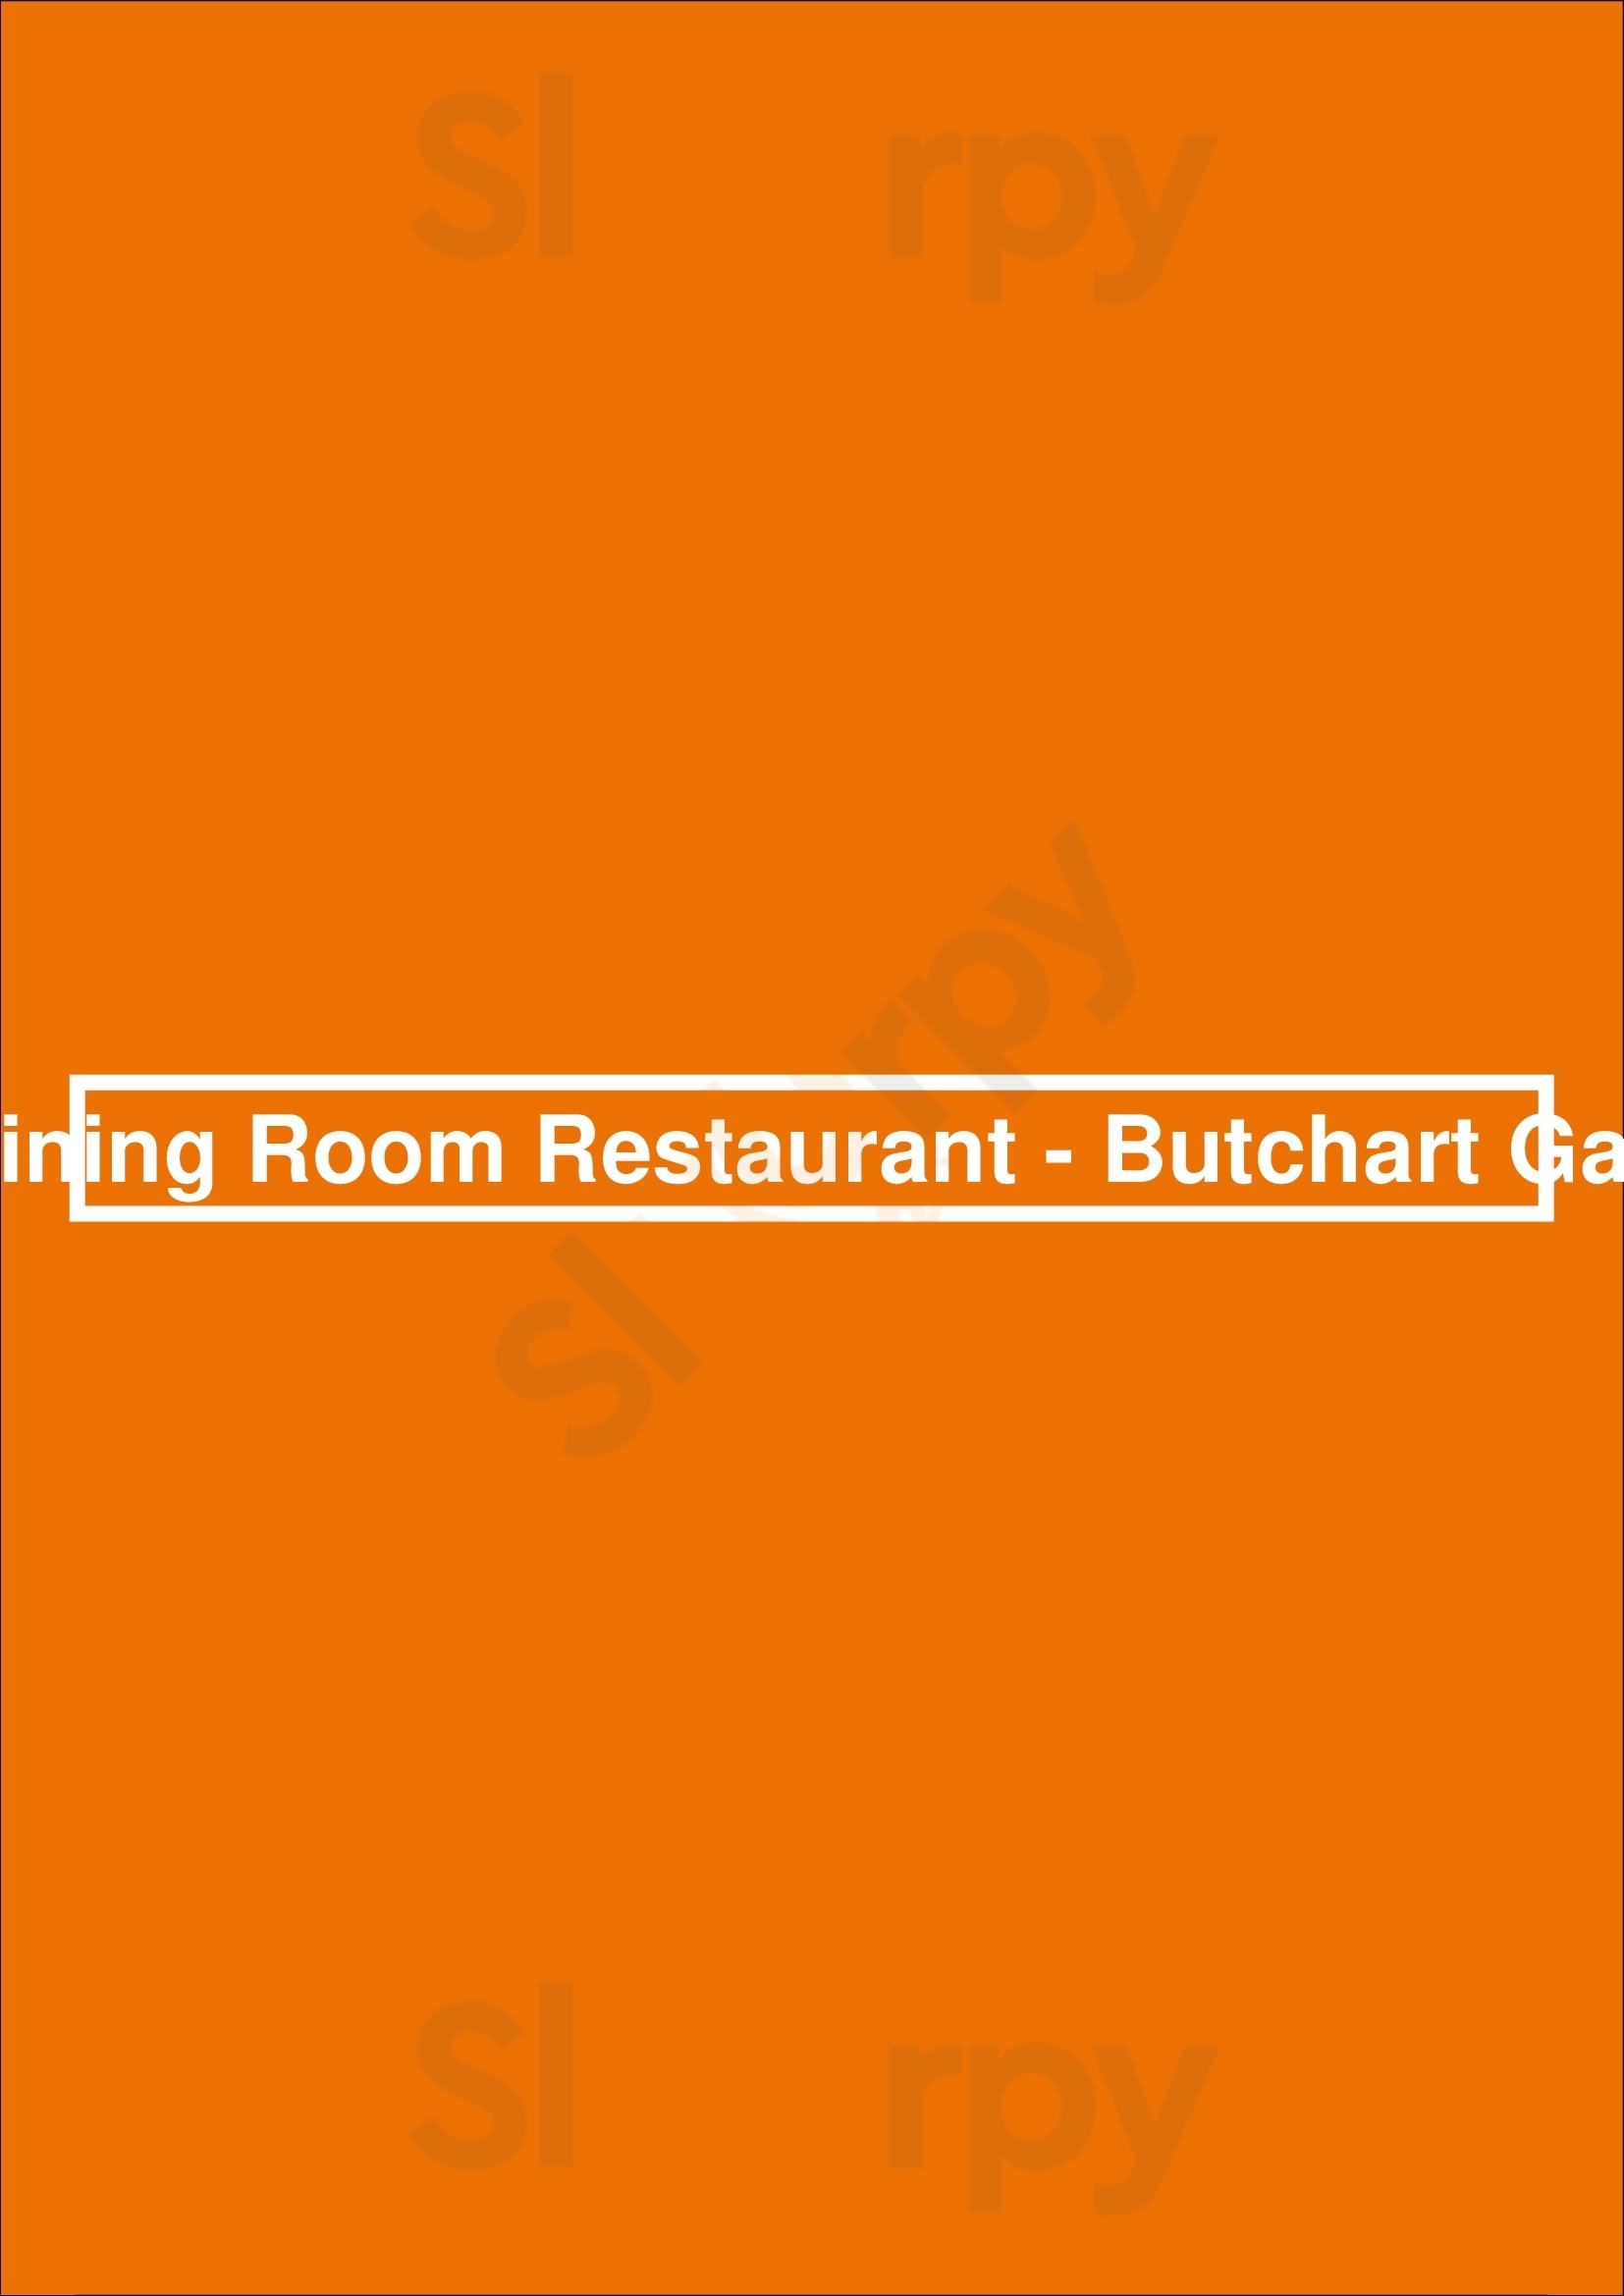 The Dining Room Restaurant - Butchart Gardens Central Saanich Menu - 1